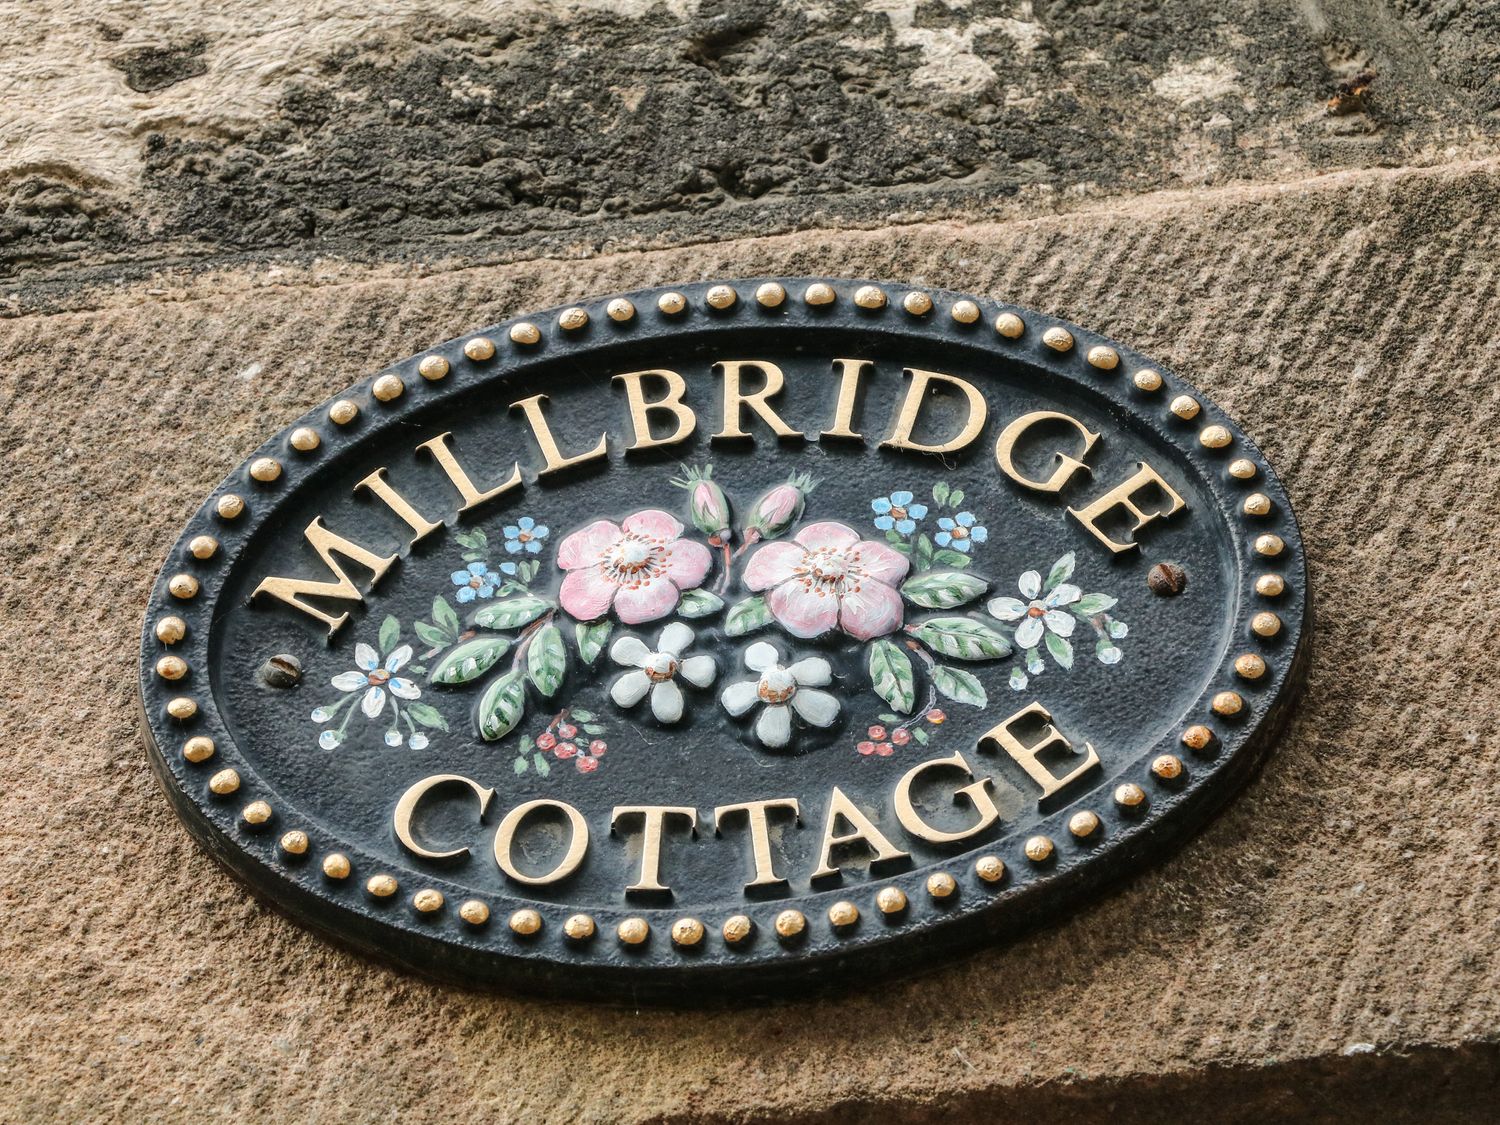 Mill Bridge Cottage, Castleton, Peak District